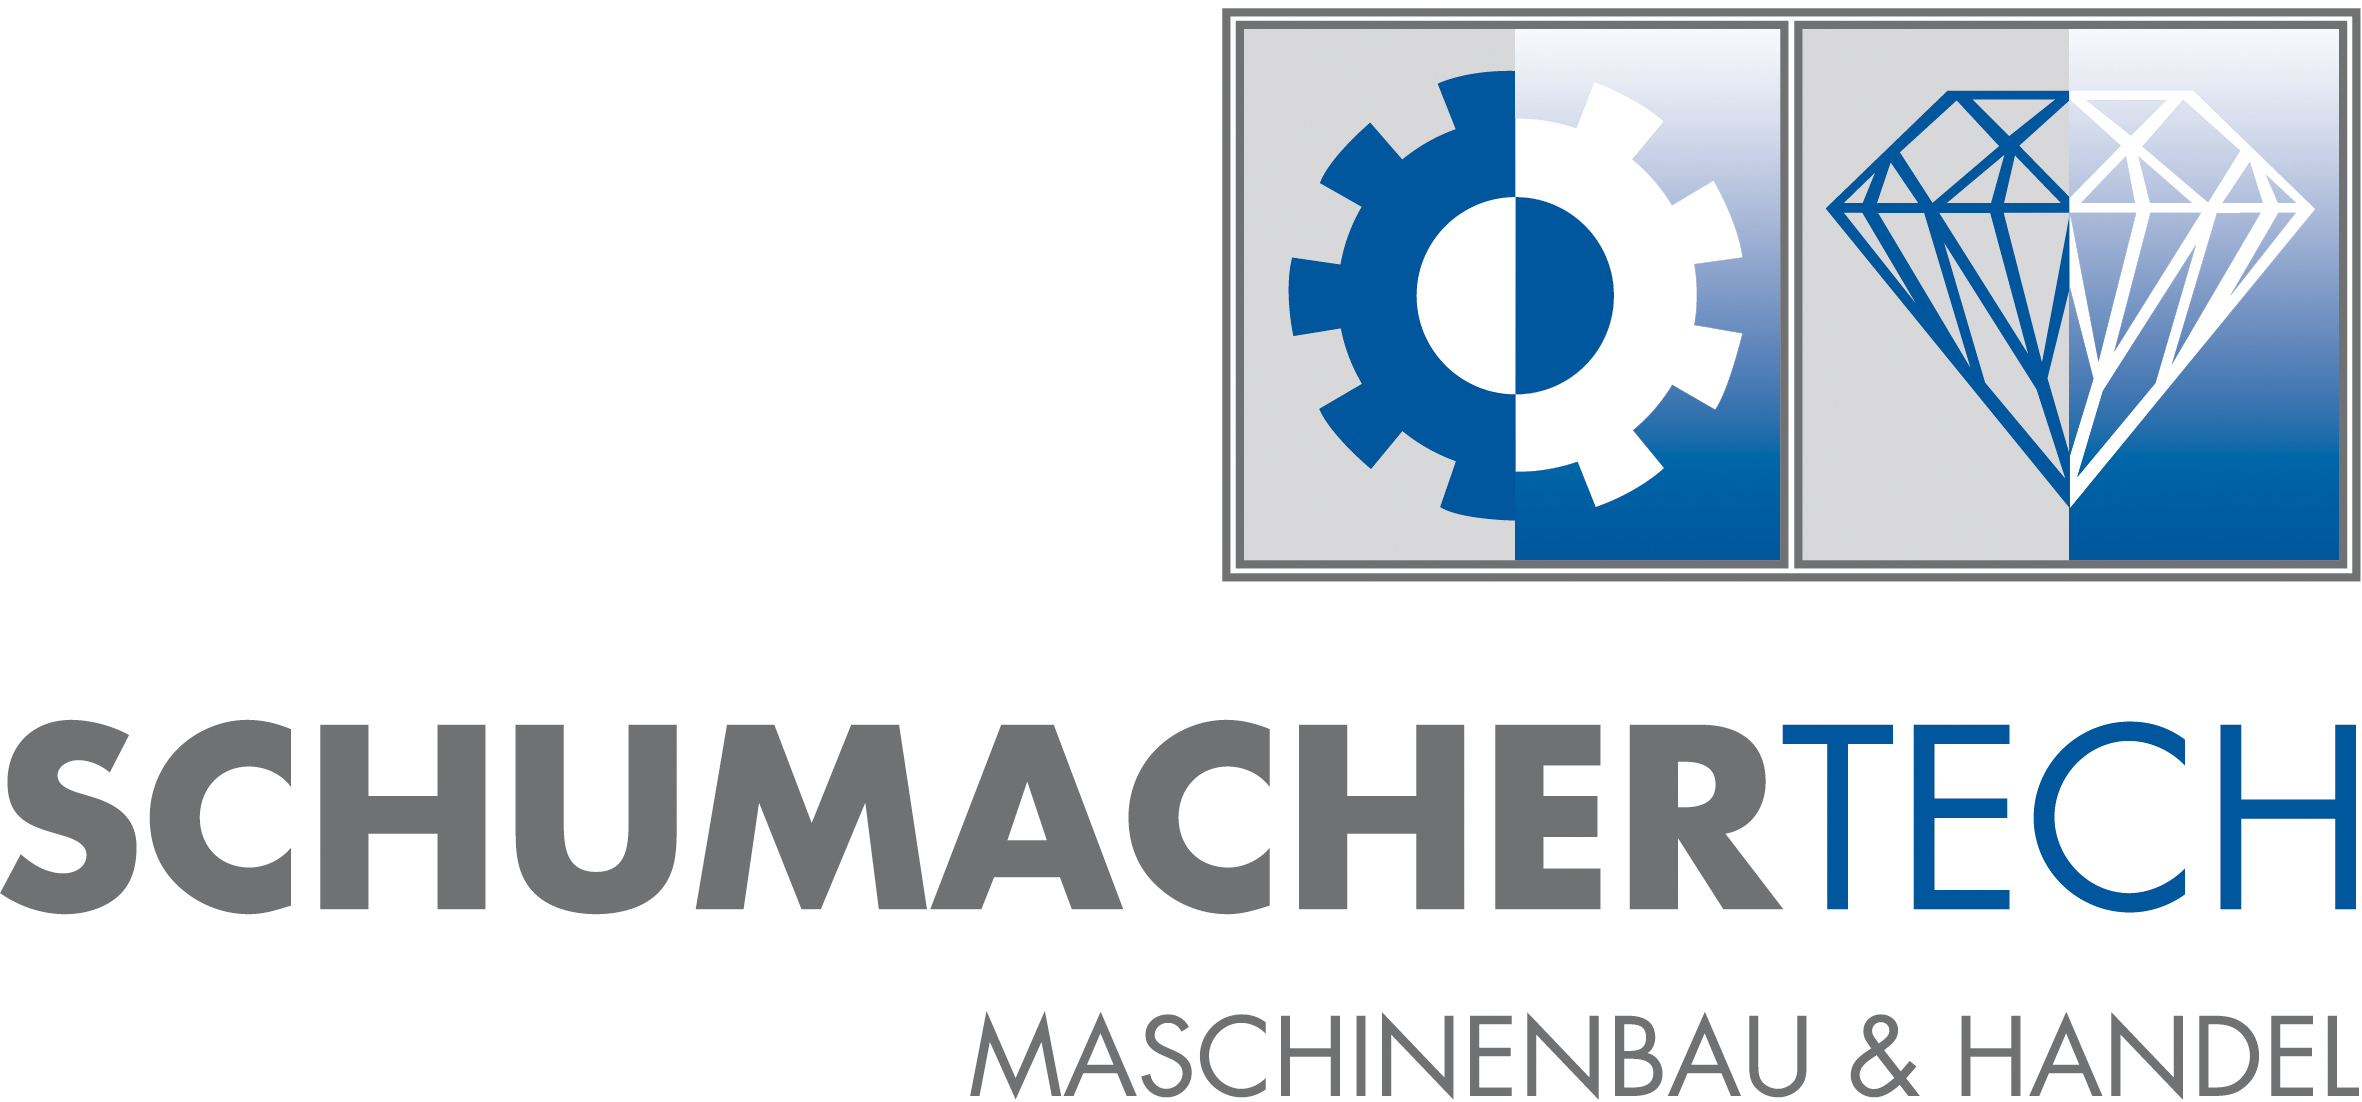 SchumacherTech GmbH & Co. KG